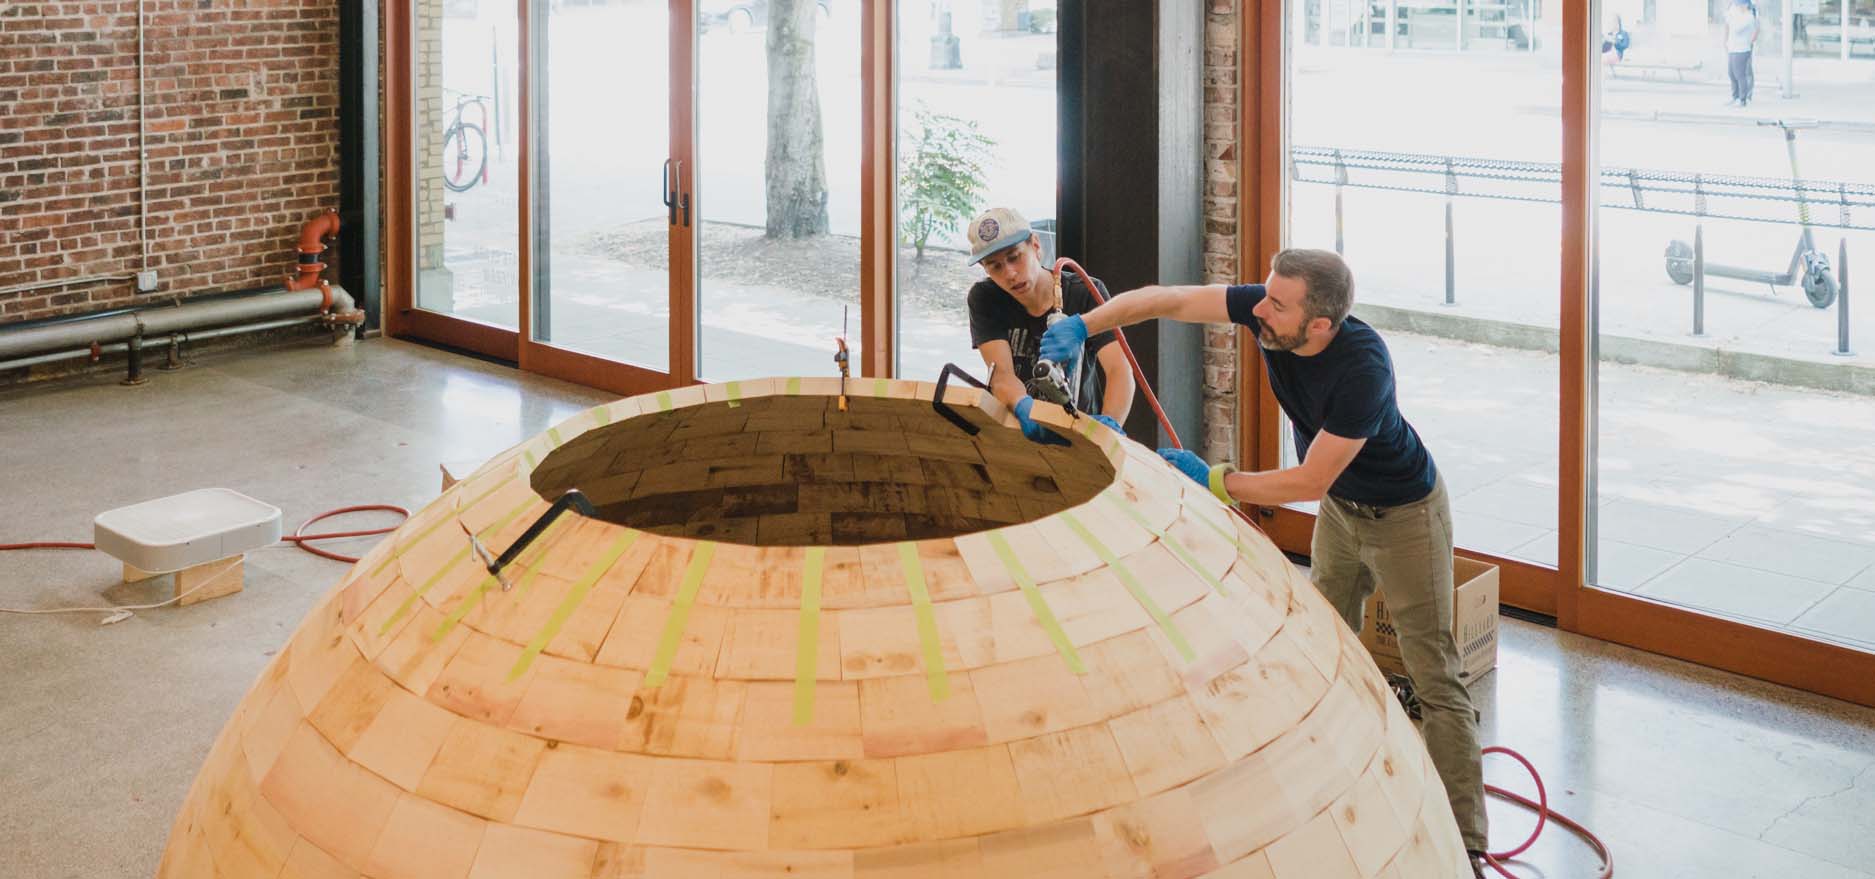 Two men building a cedar dome for an art installation.